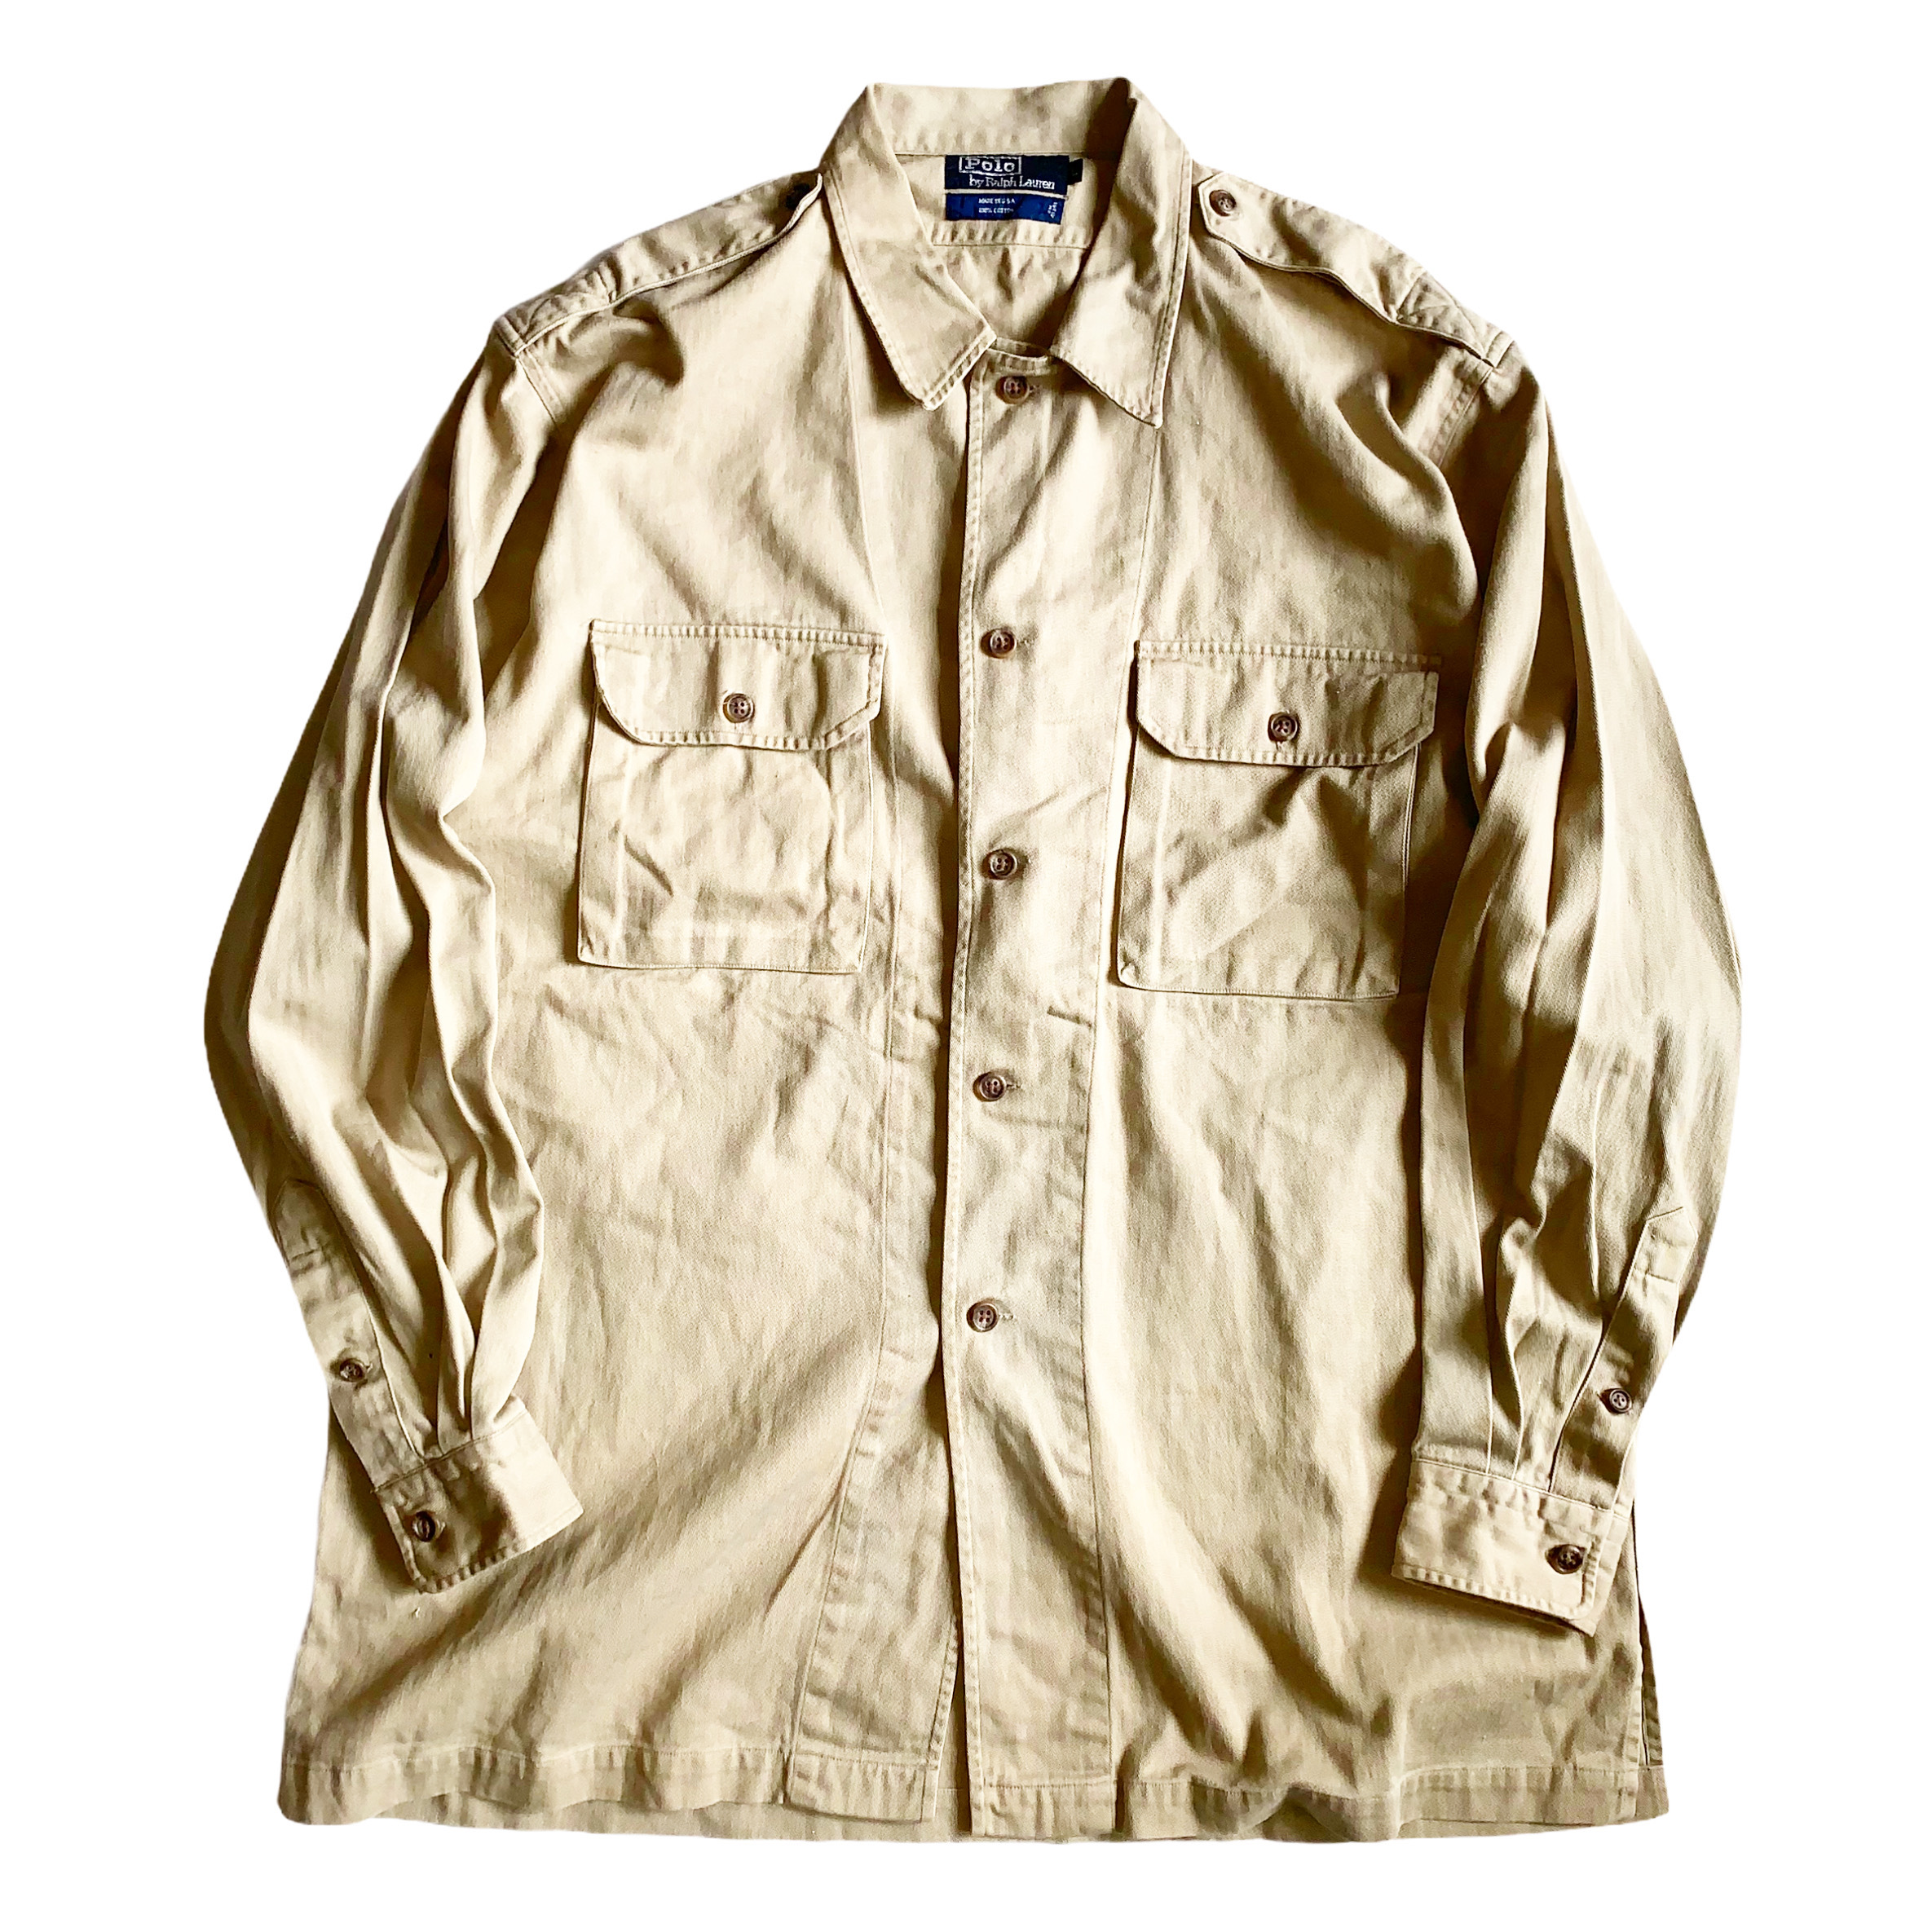 Polo Ralph Lauren safari jacket 